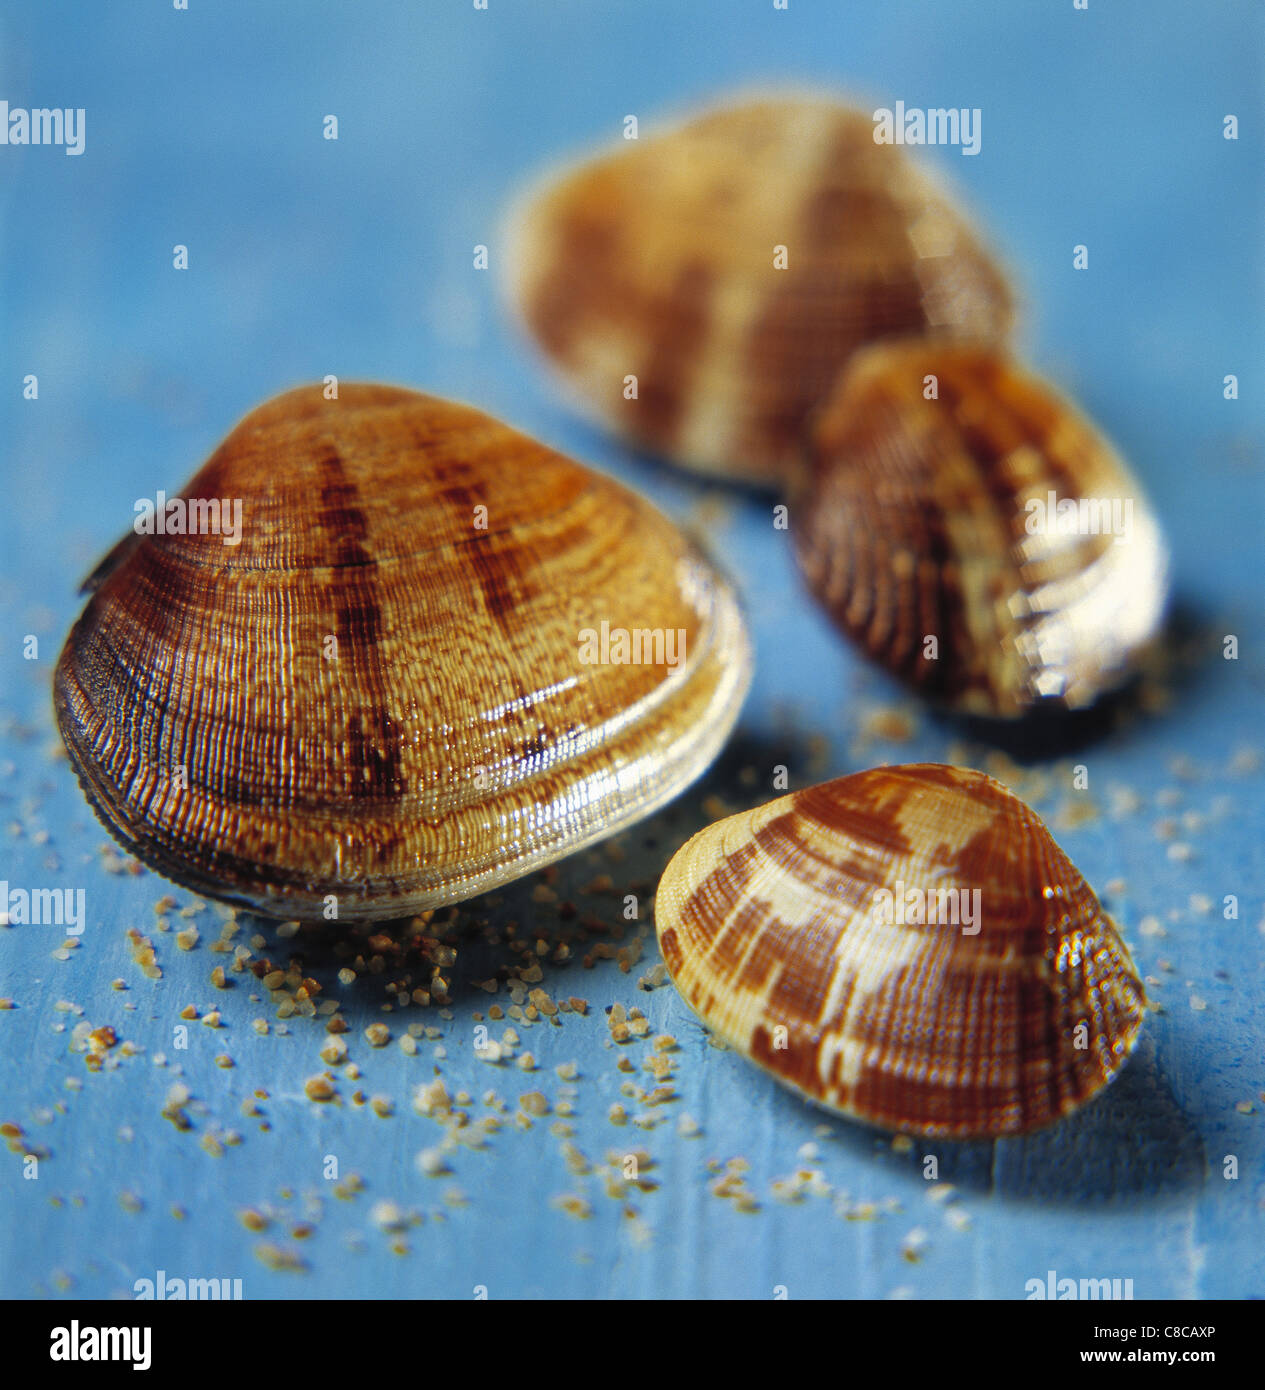 Carpet-shell clams Stock Photo - Alamy